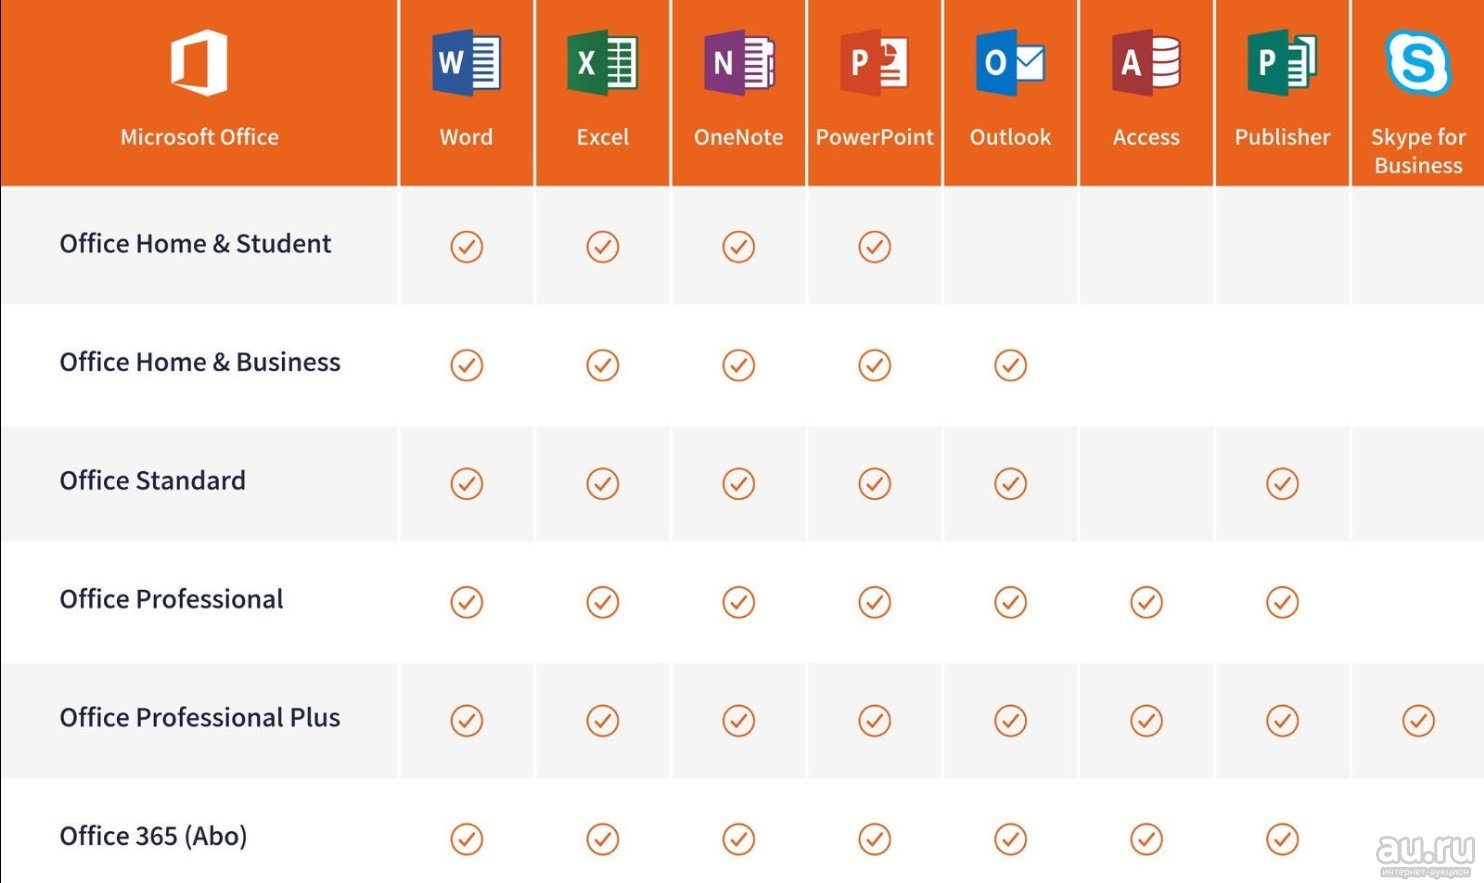 Microsoft Office 2019 Pro Plus Version Comparison